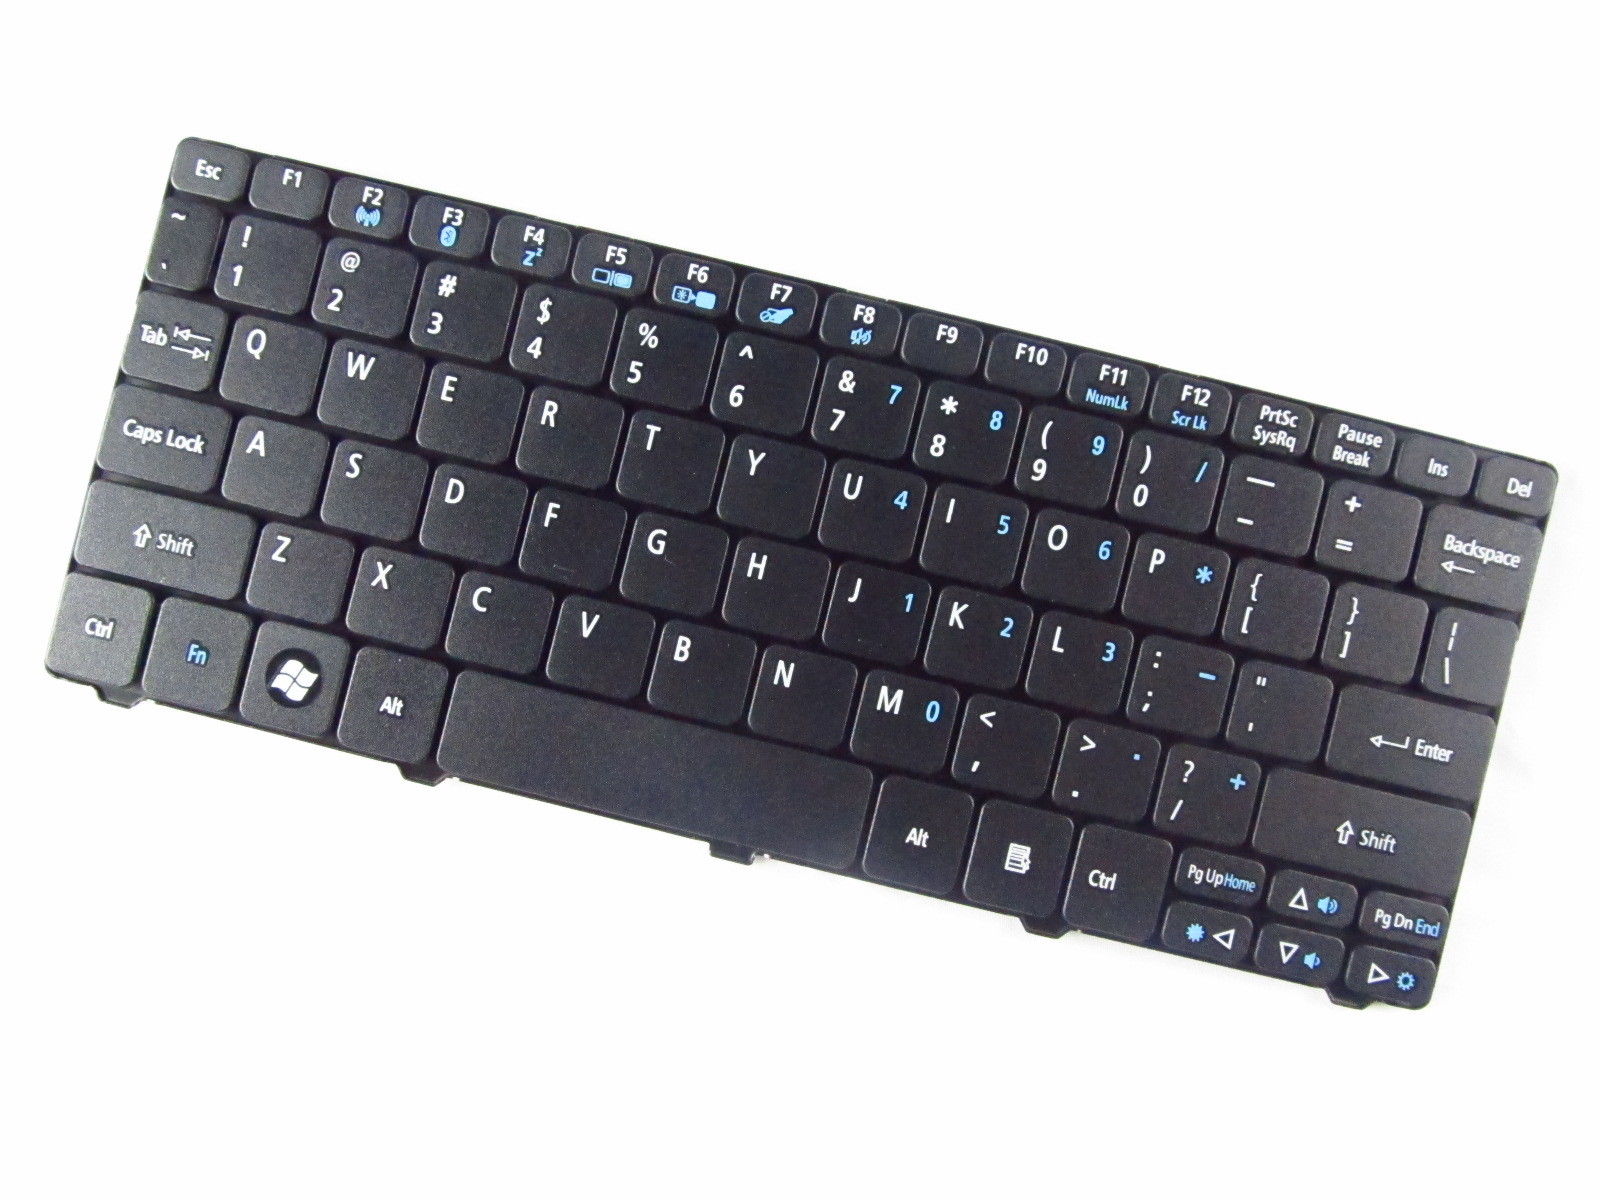 Hcl Laptop Keyboard Repair/replacement in chennai